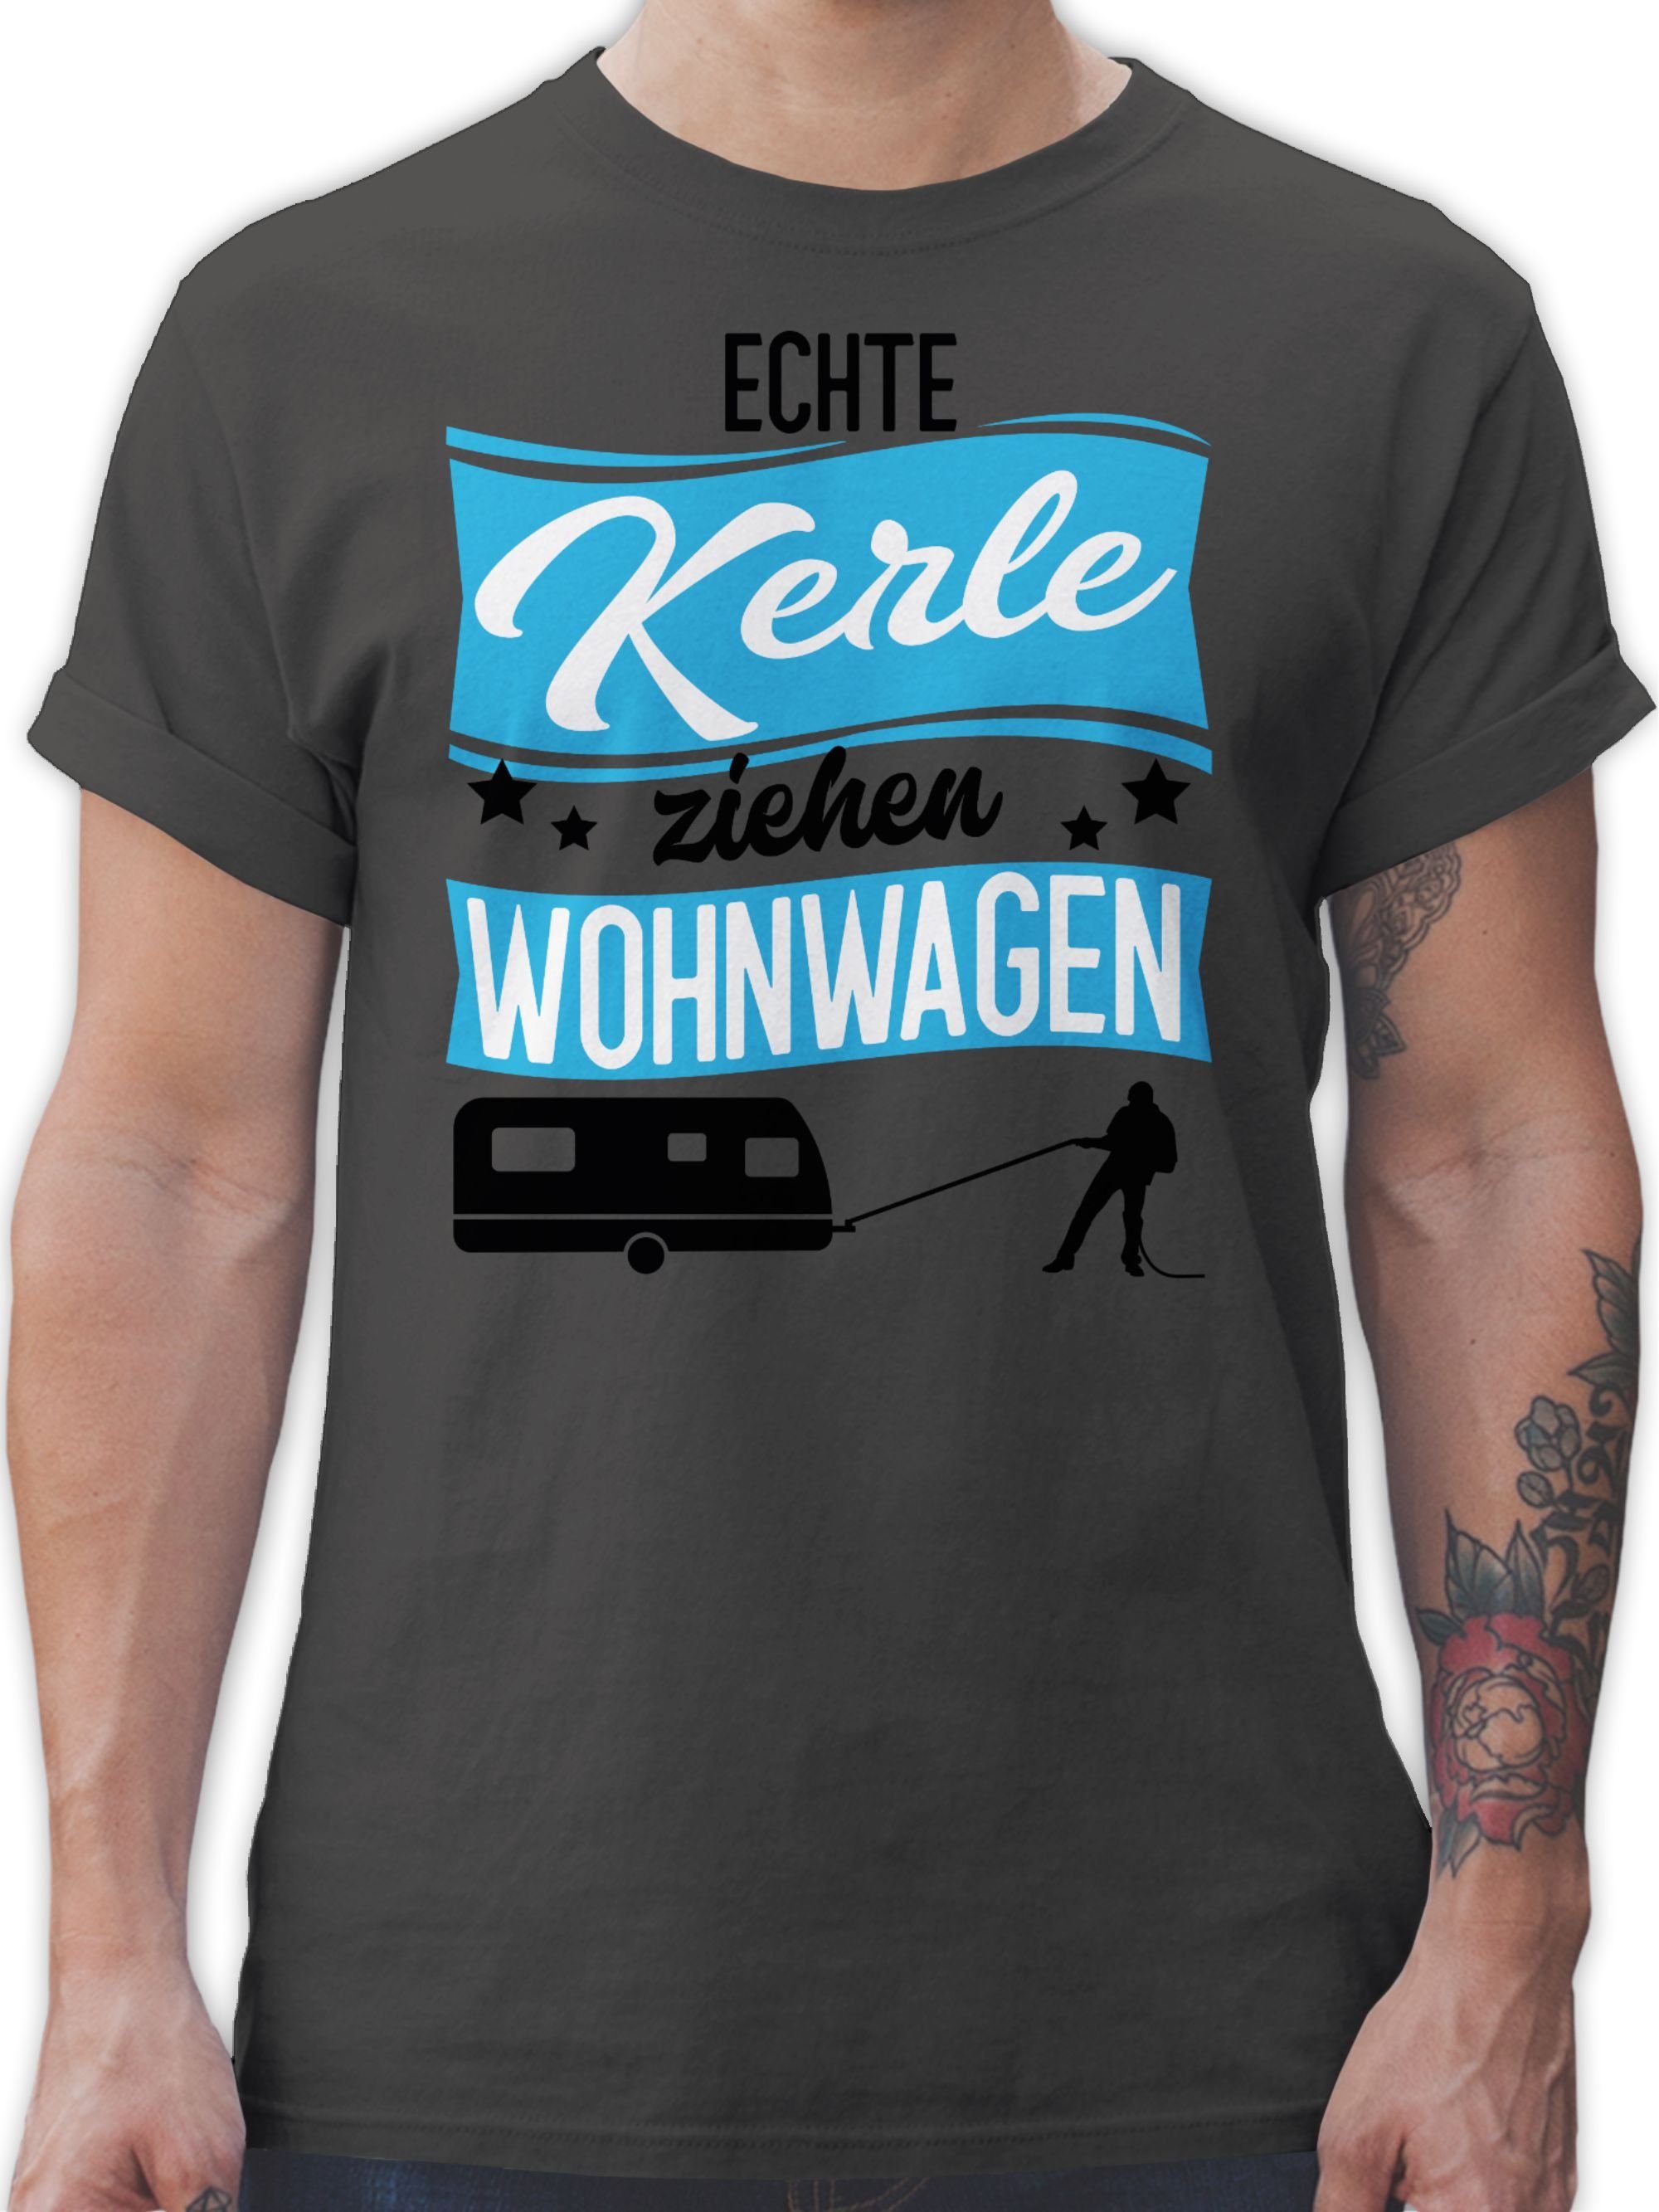 T-Shirt ziehen Kerle Geschenke Herren Echte 2 Shirtracer - & Männer schwarz/blau Dunkelgrau Wohnwagen